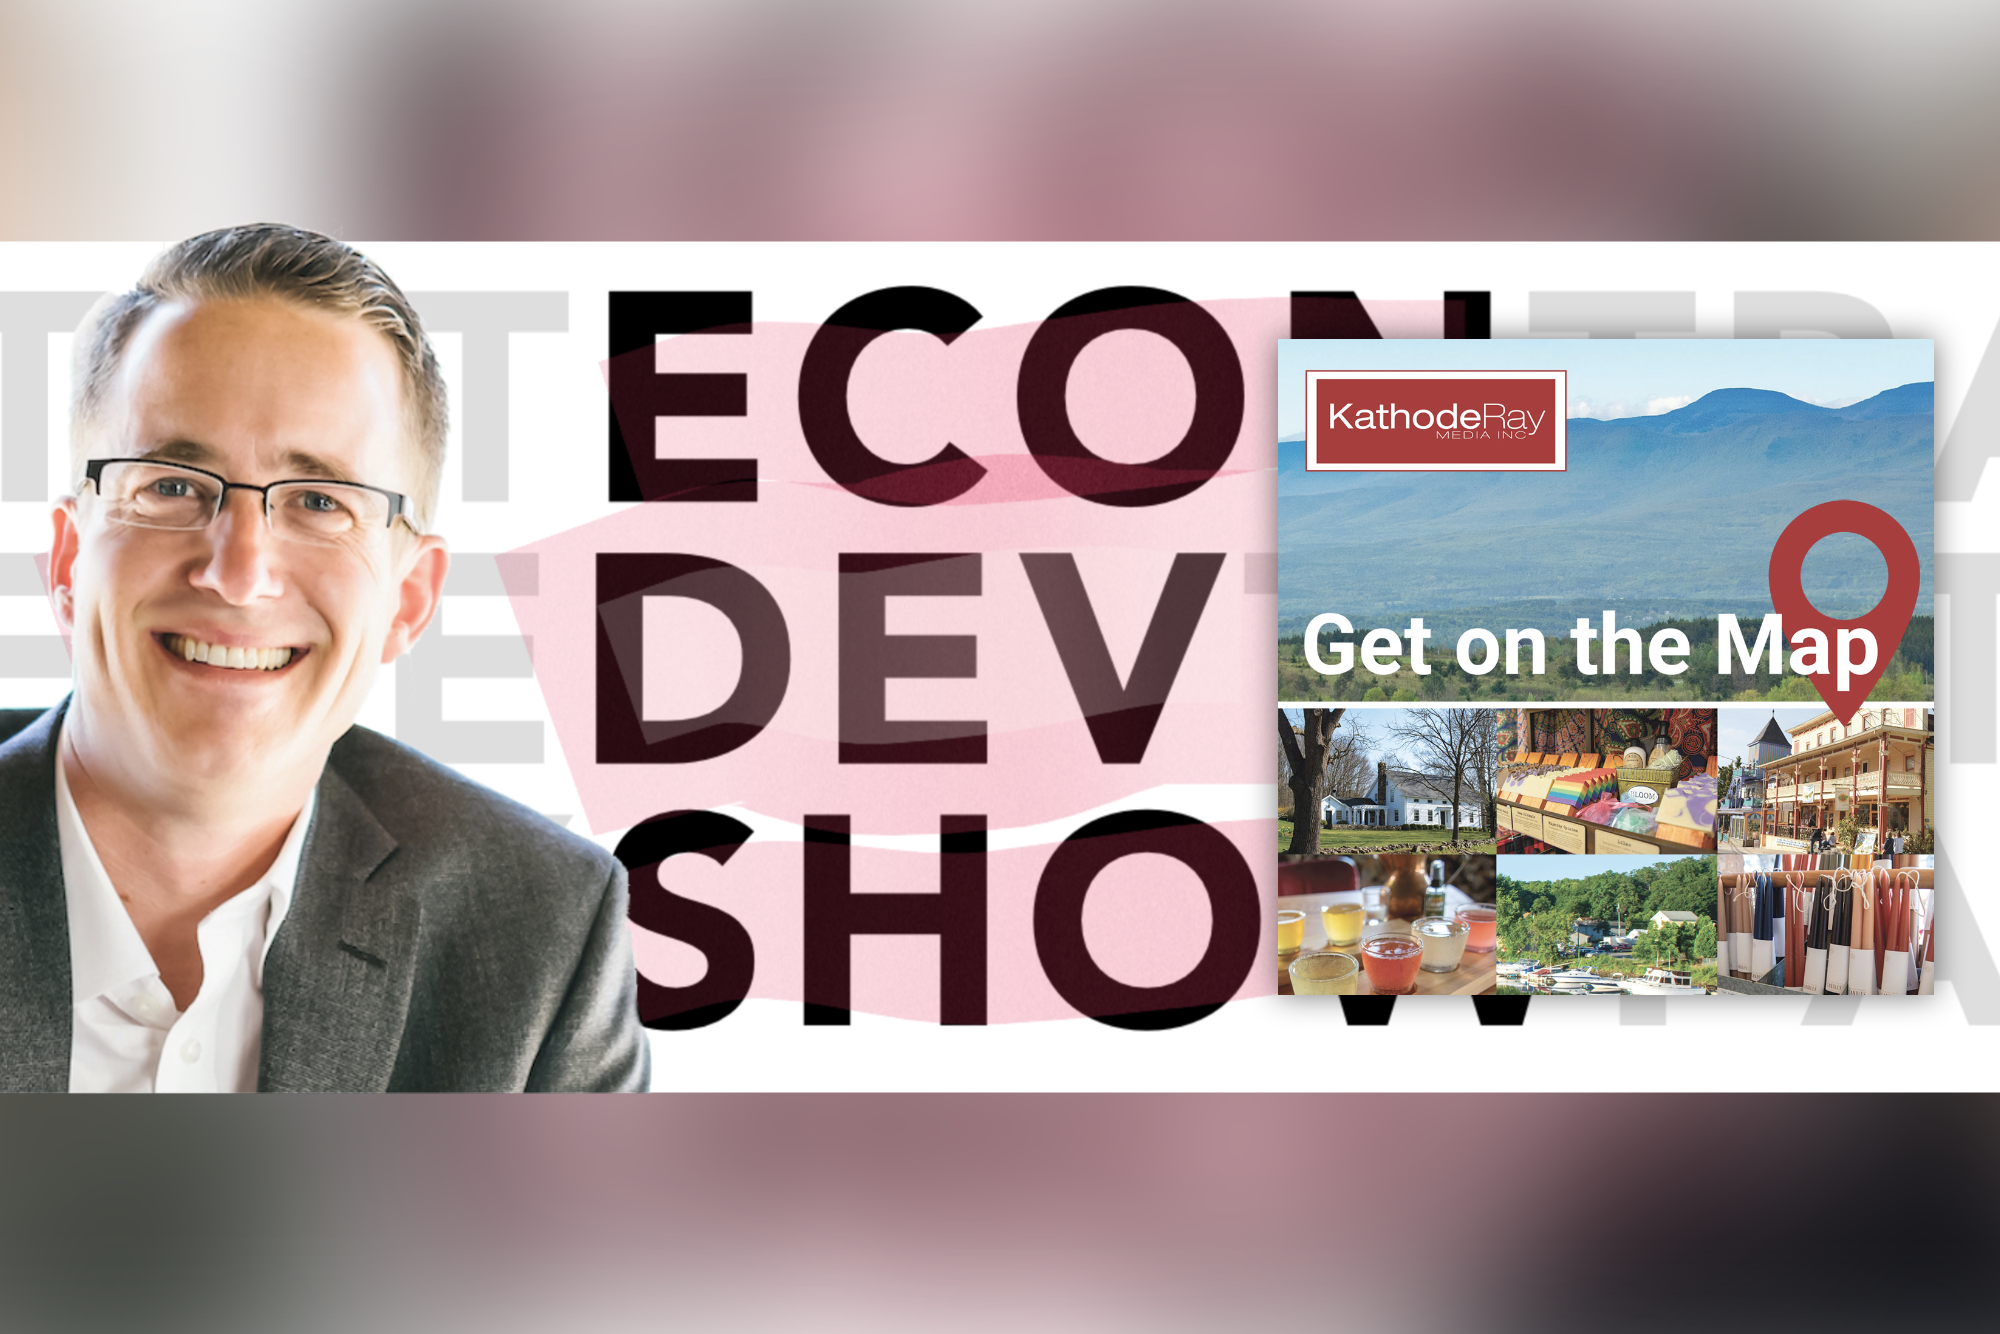 Podcast Episode 48 - Local Econ Dev Digital Marketing with KathodeRay Media